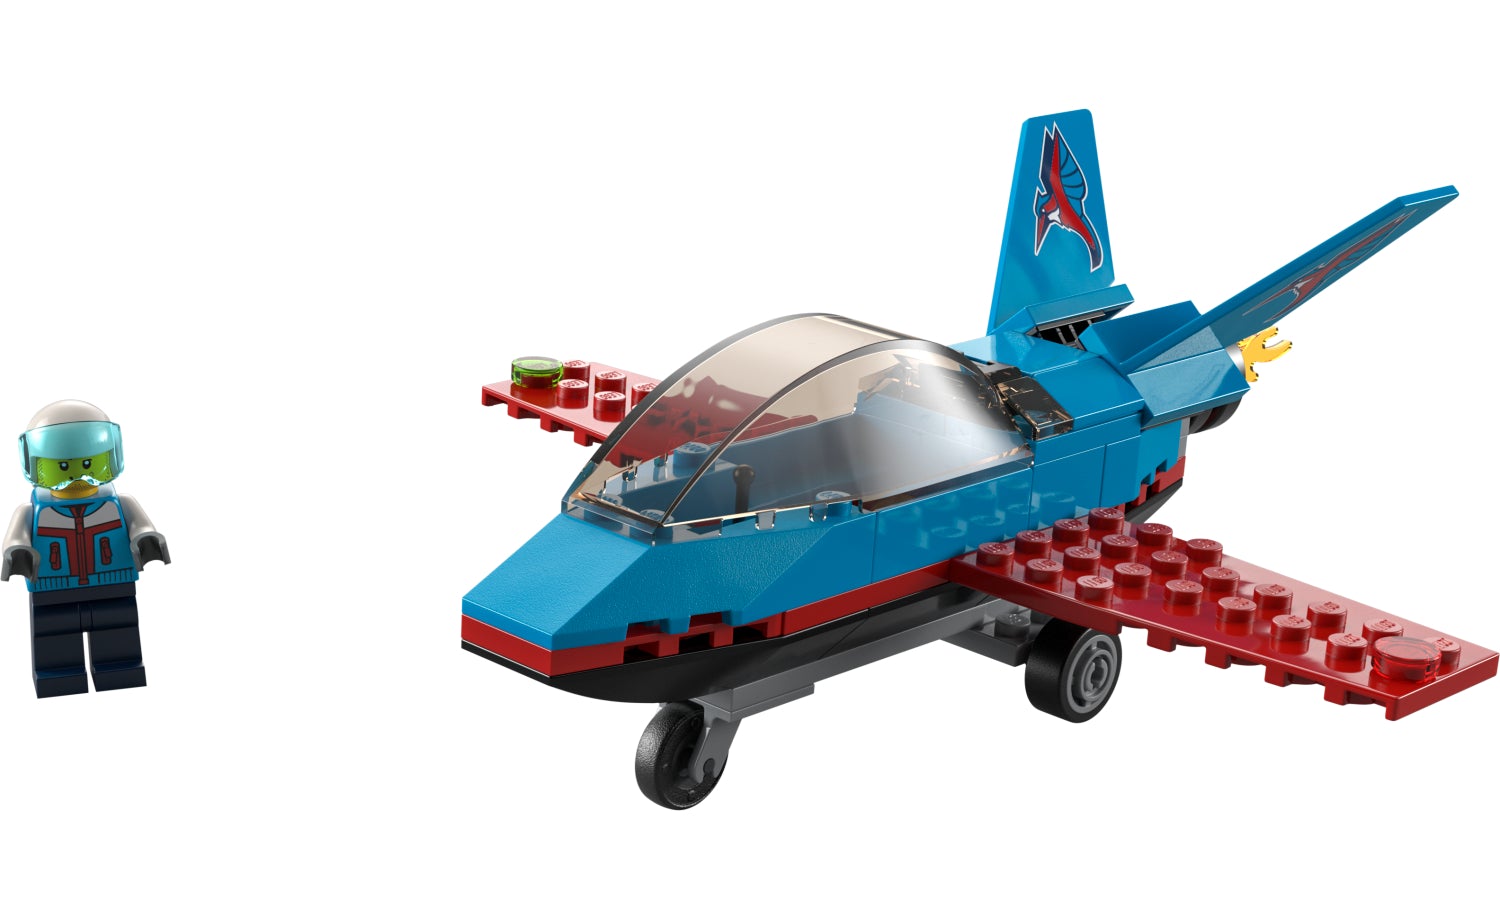 LEGO® City Stunt Plane 60323